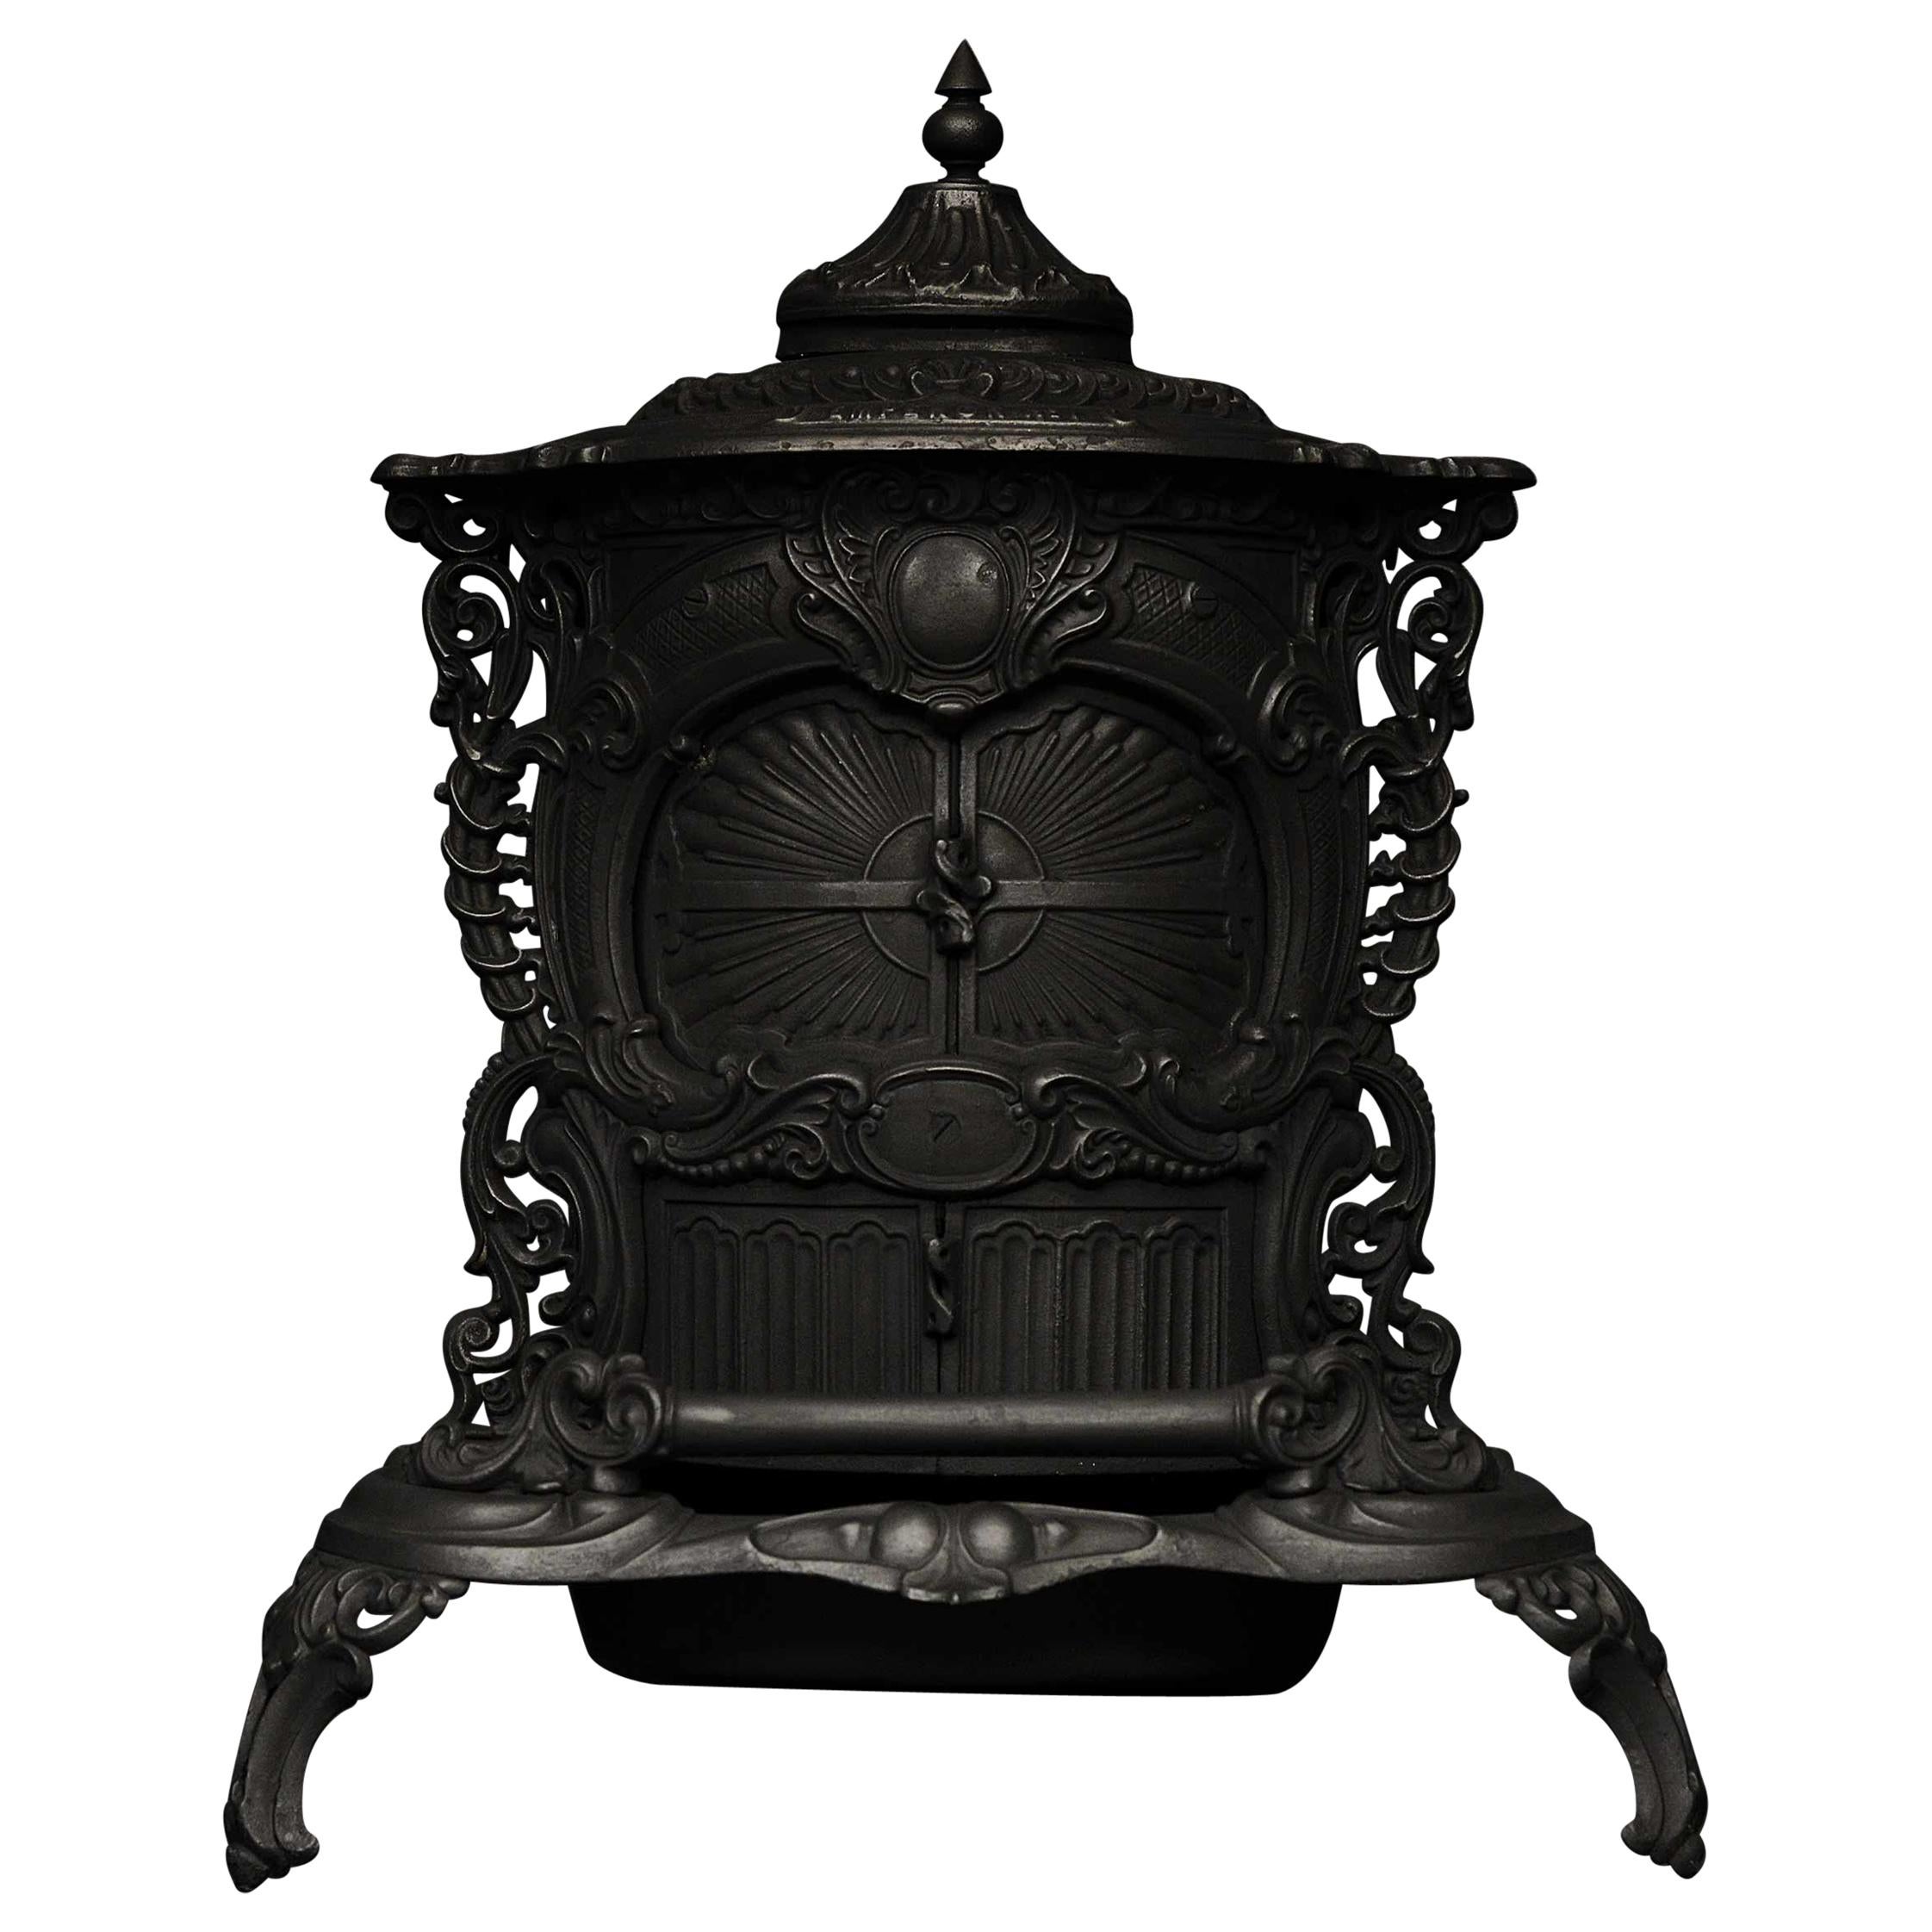 Decorative Cast Iron Stove For Sale